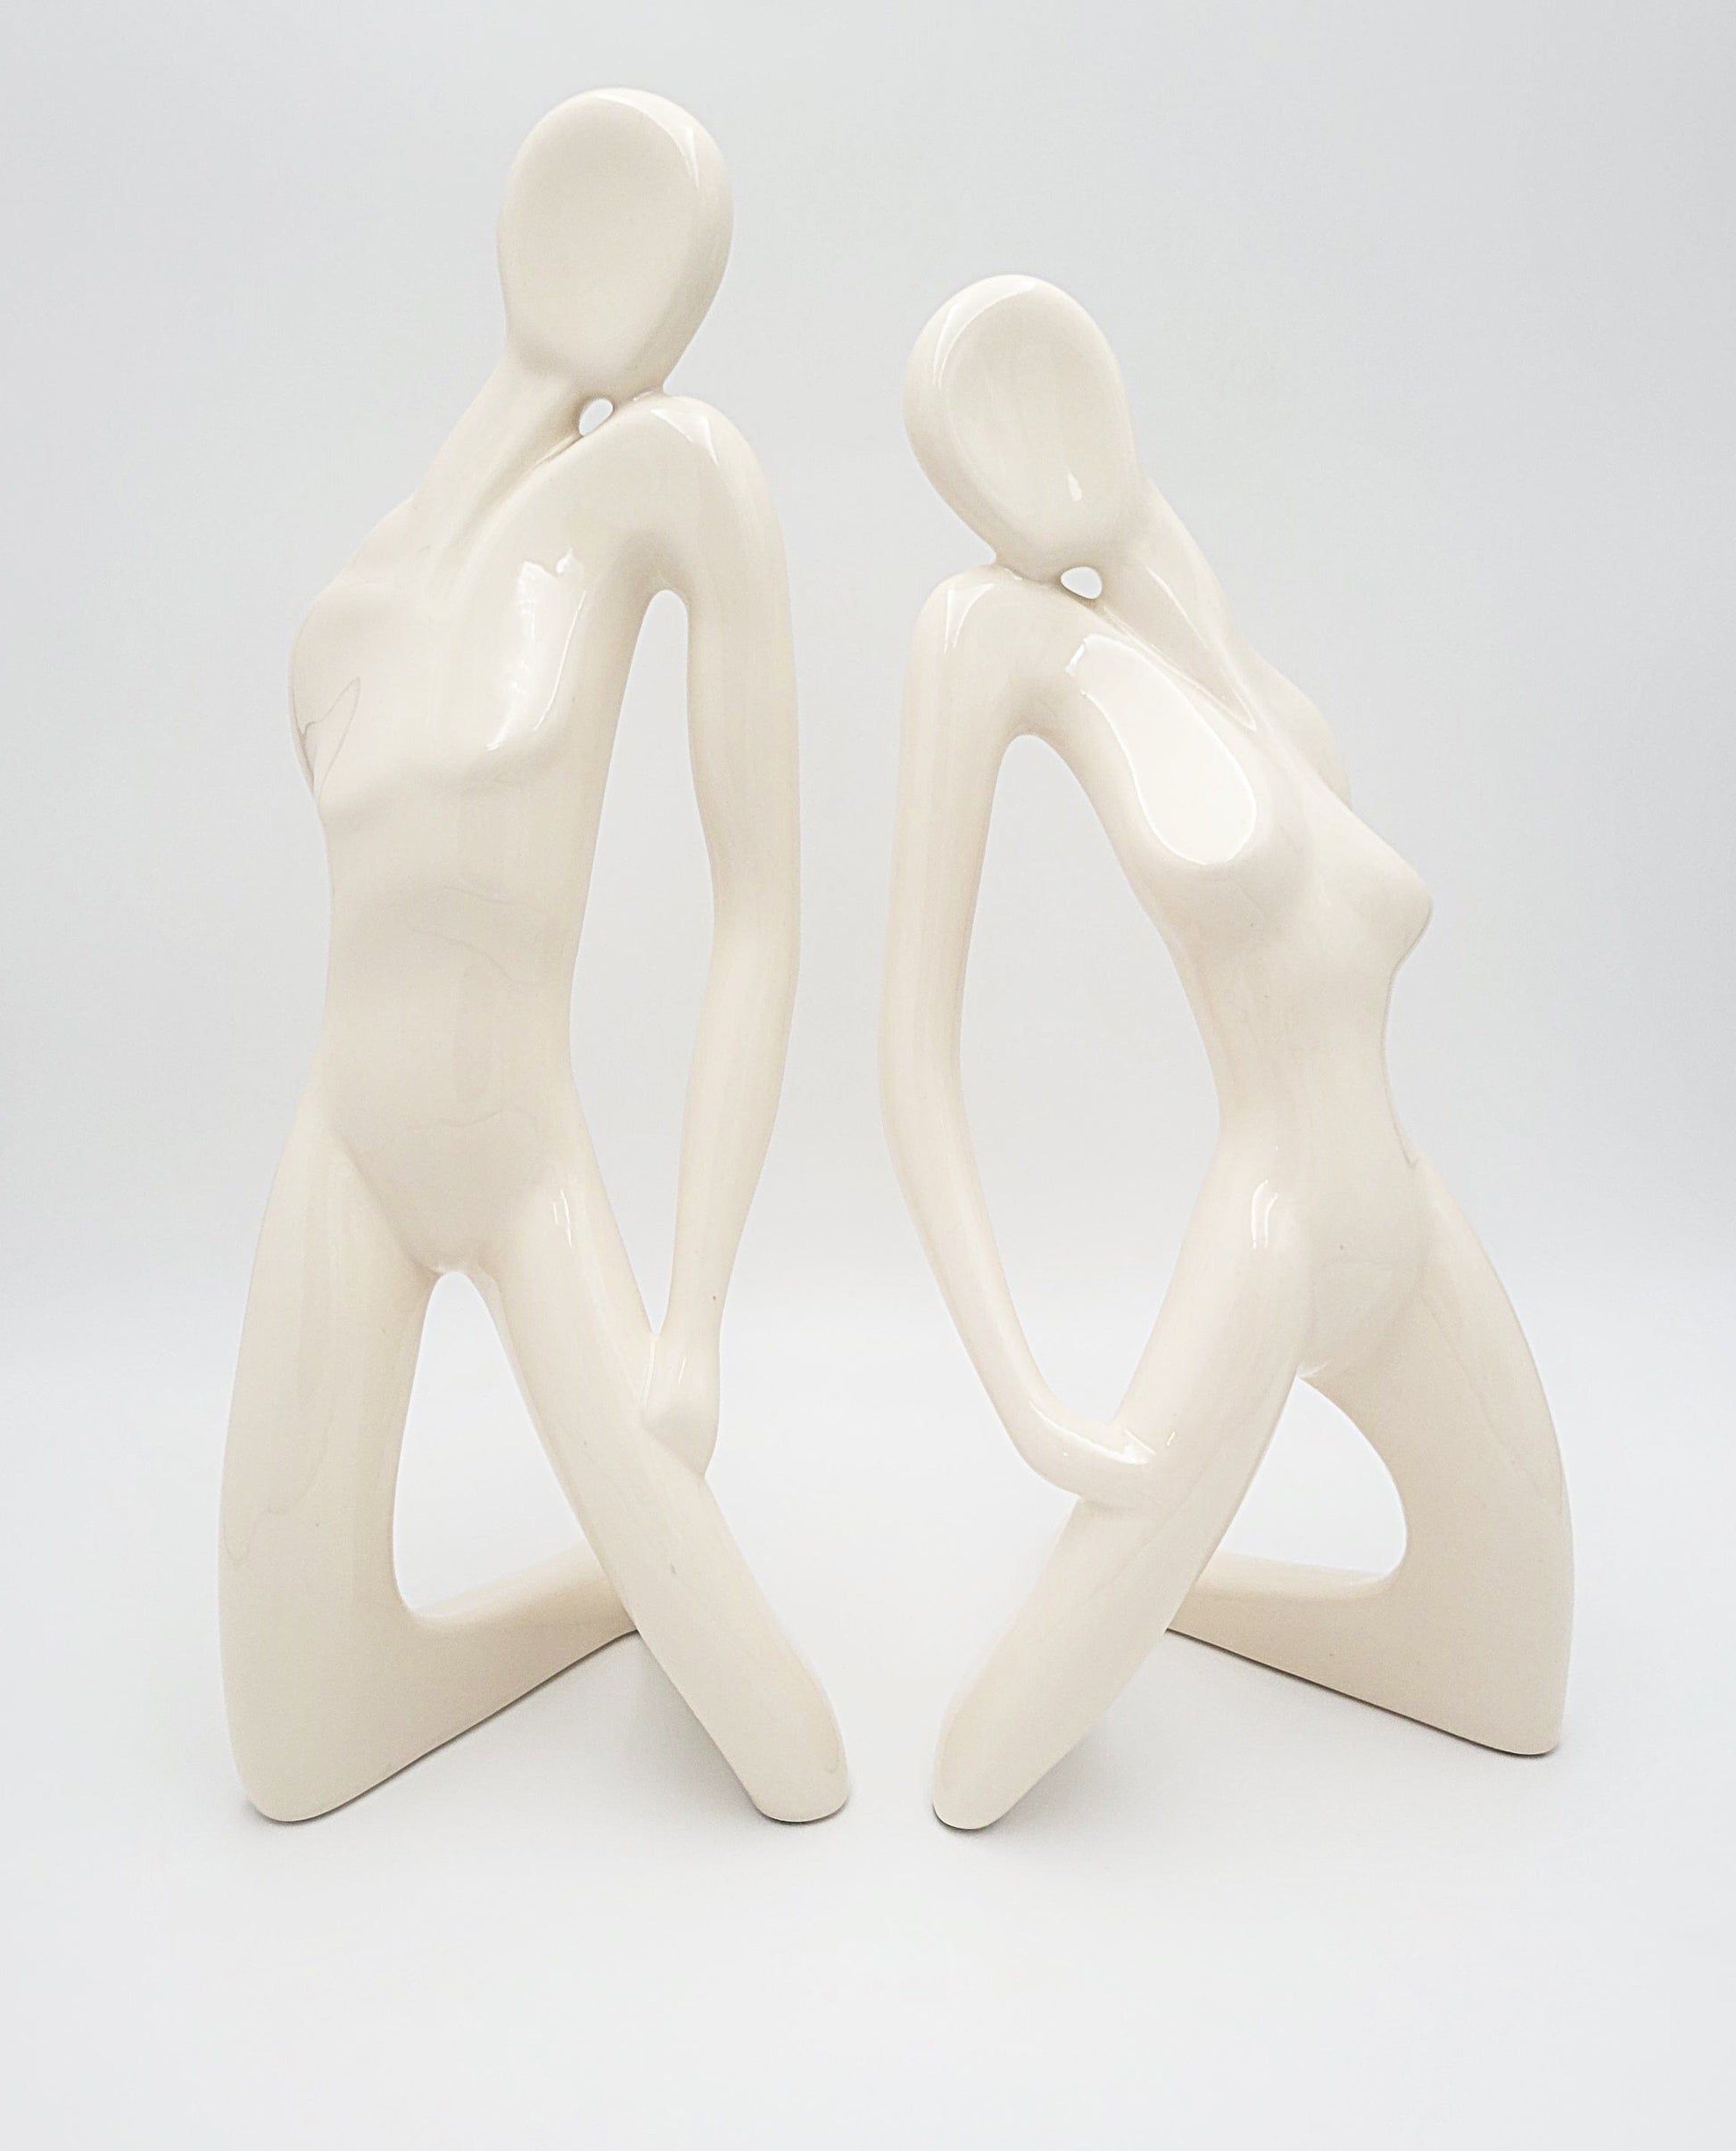 Jaru Sculpture MCM Jaru California Ceramic Abstract Modernist Human Figure TALL Sculpture 1980s